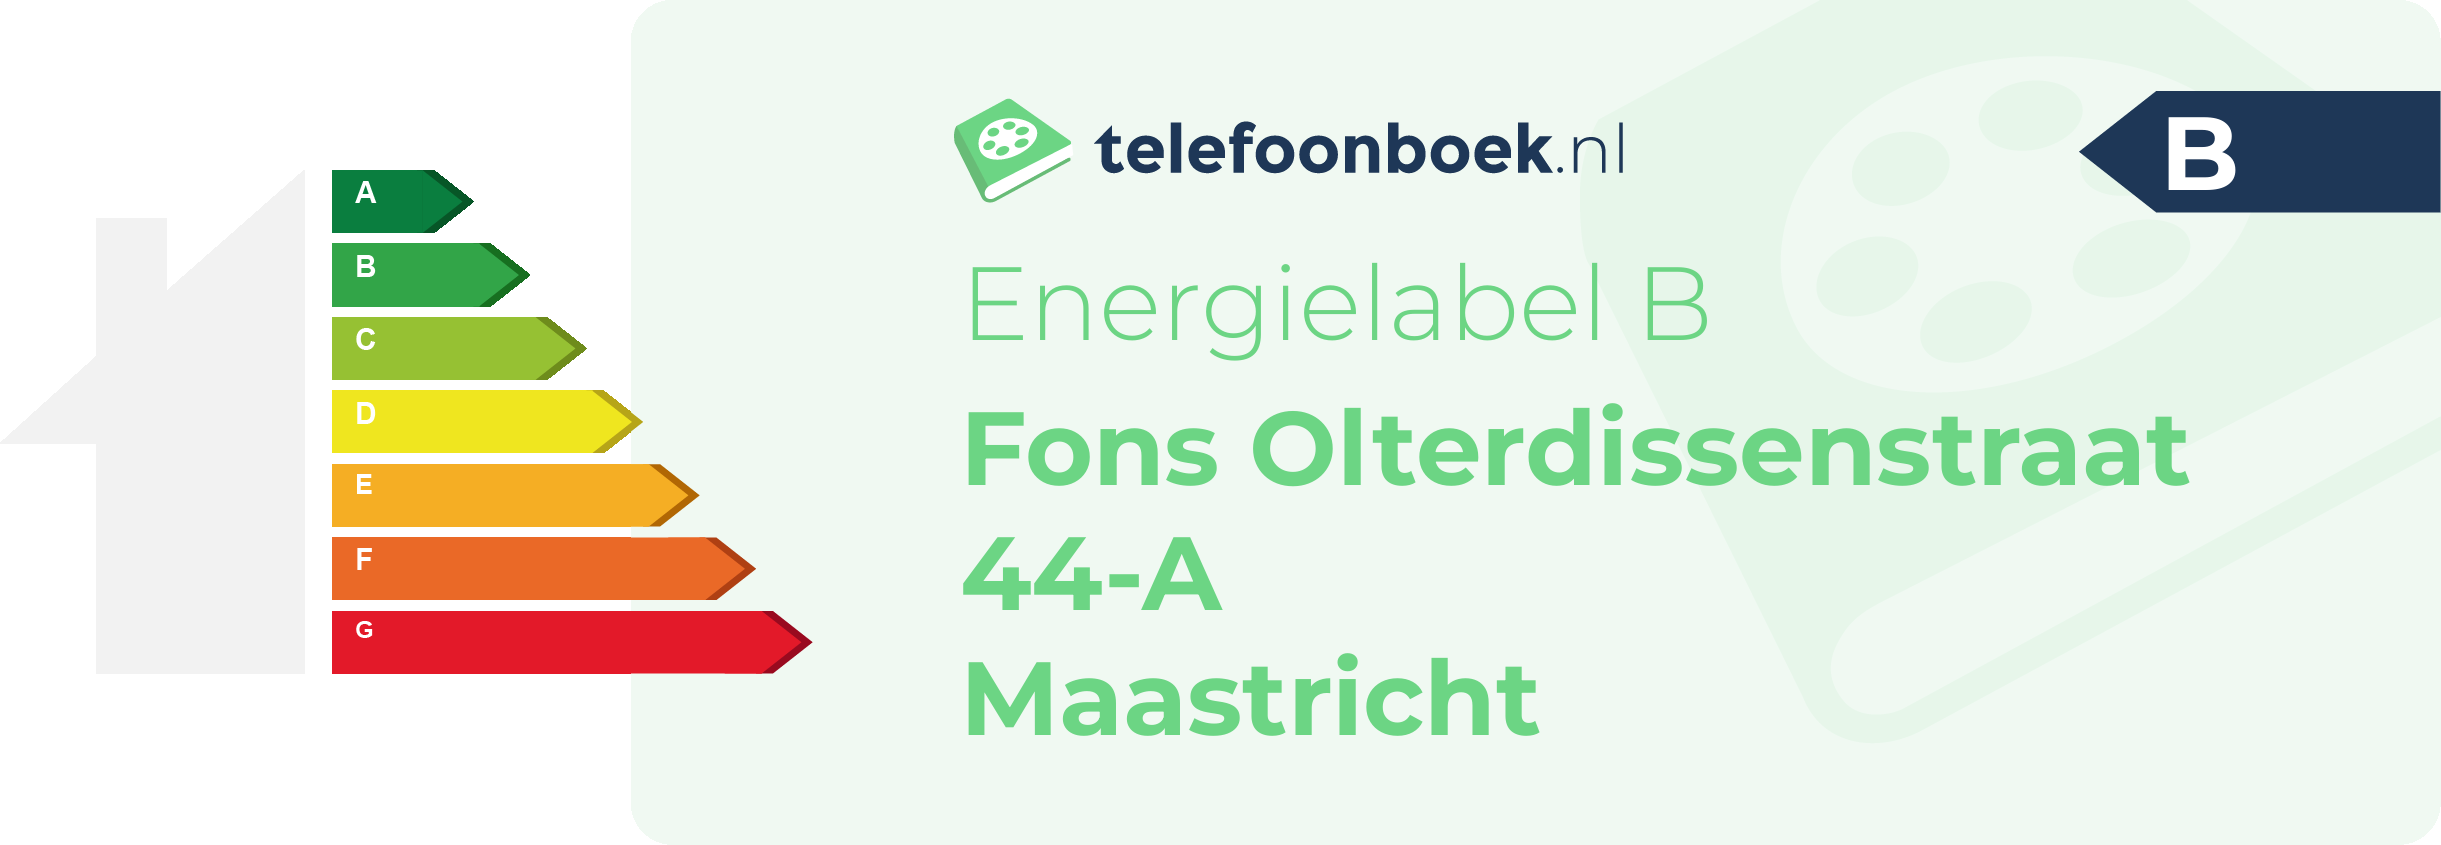 Energielabel Fons Olterdissenstraat 44-A Maastricht